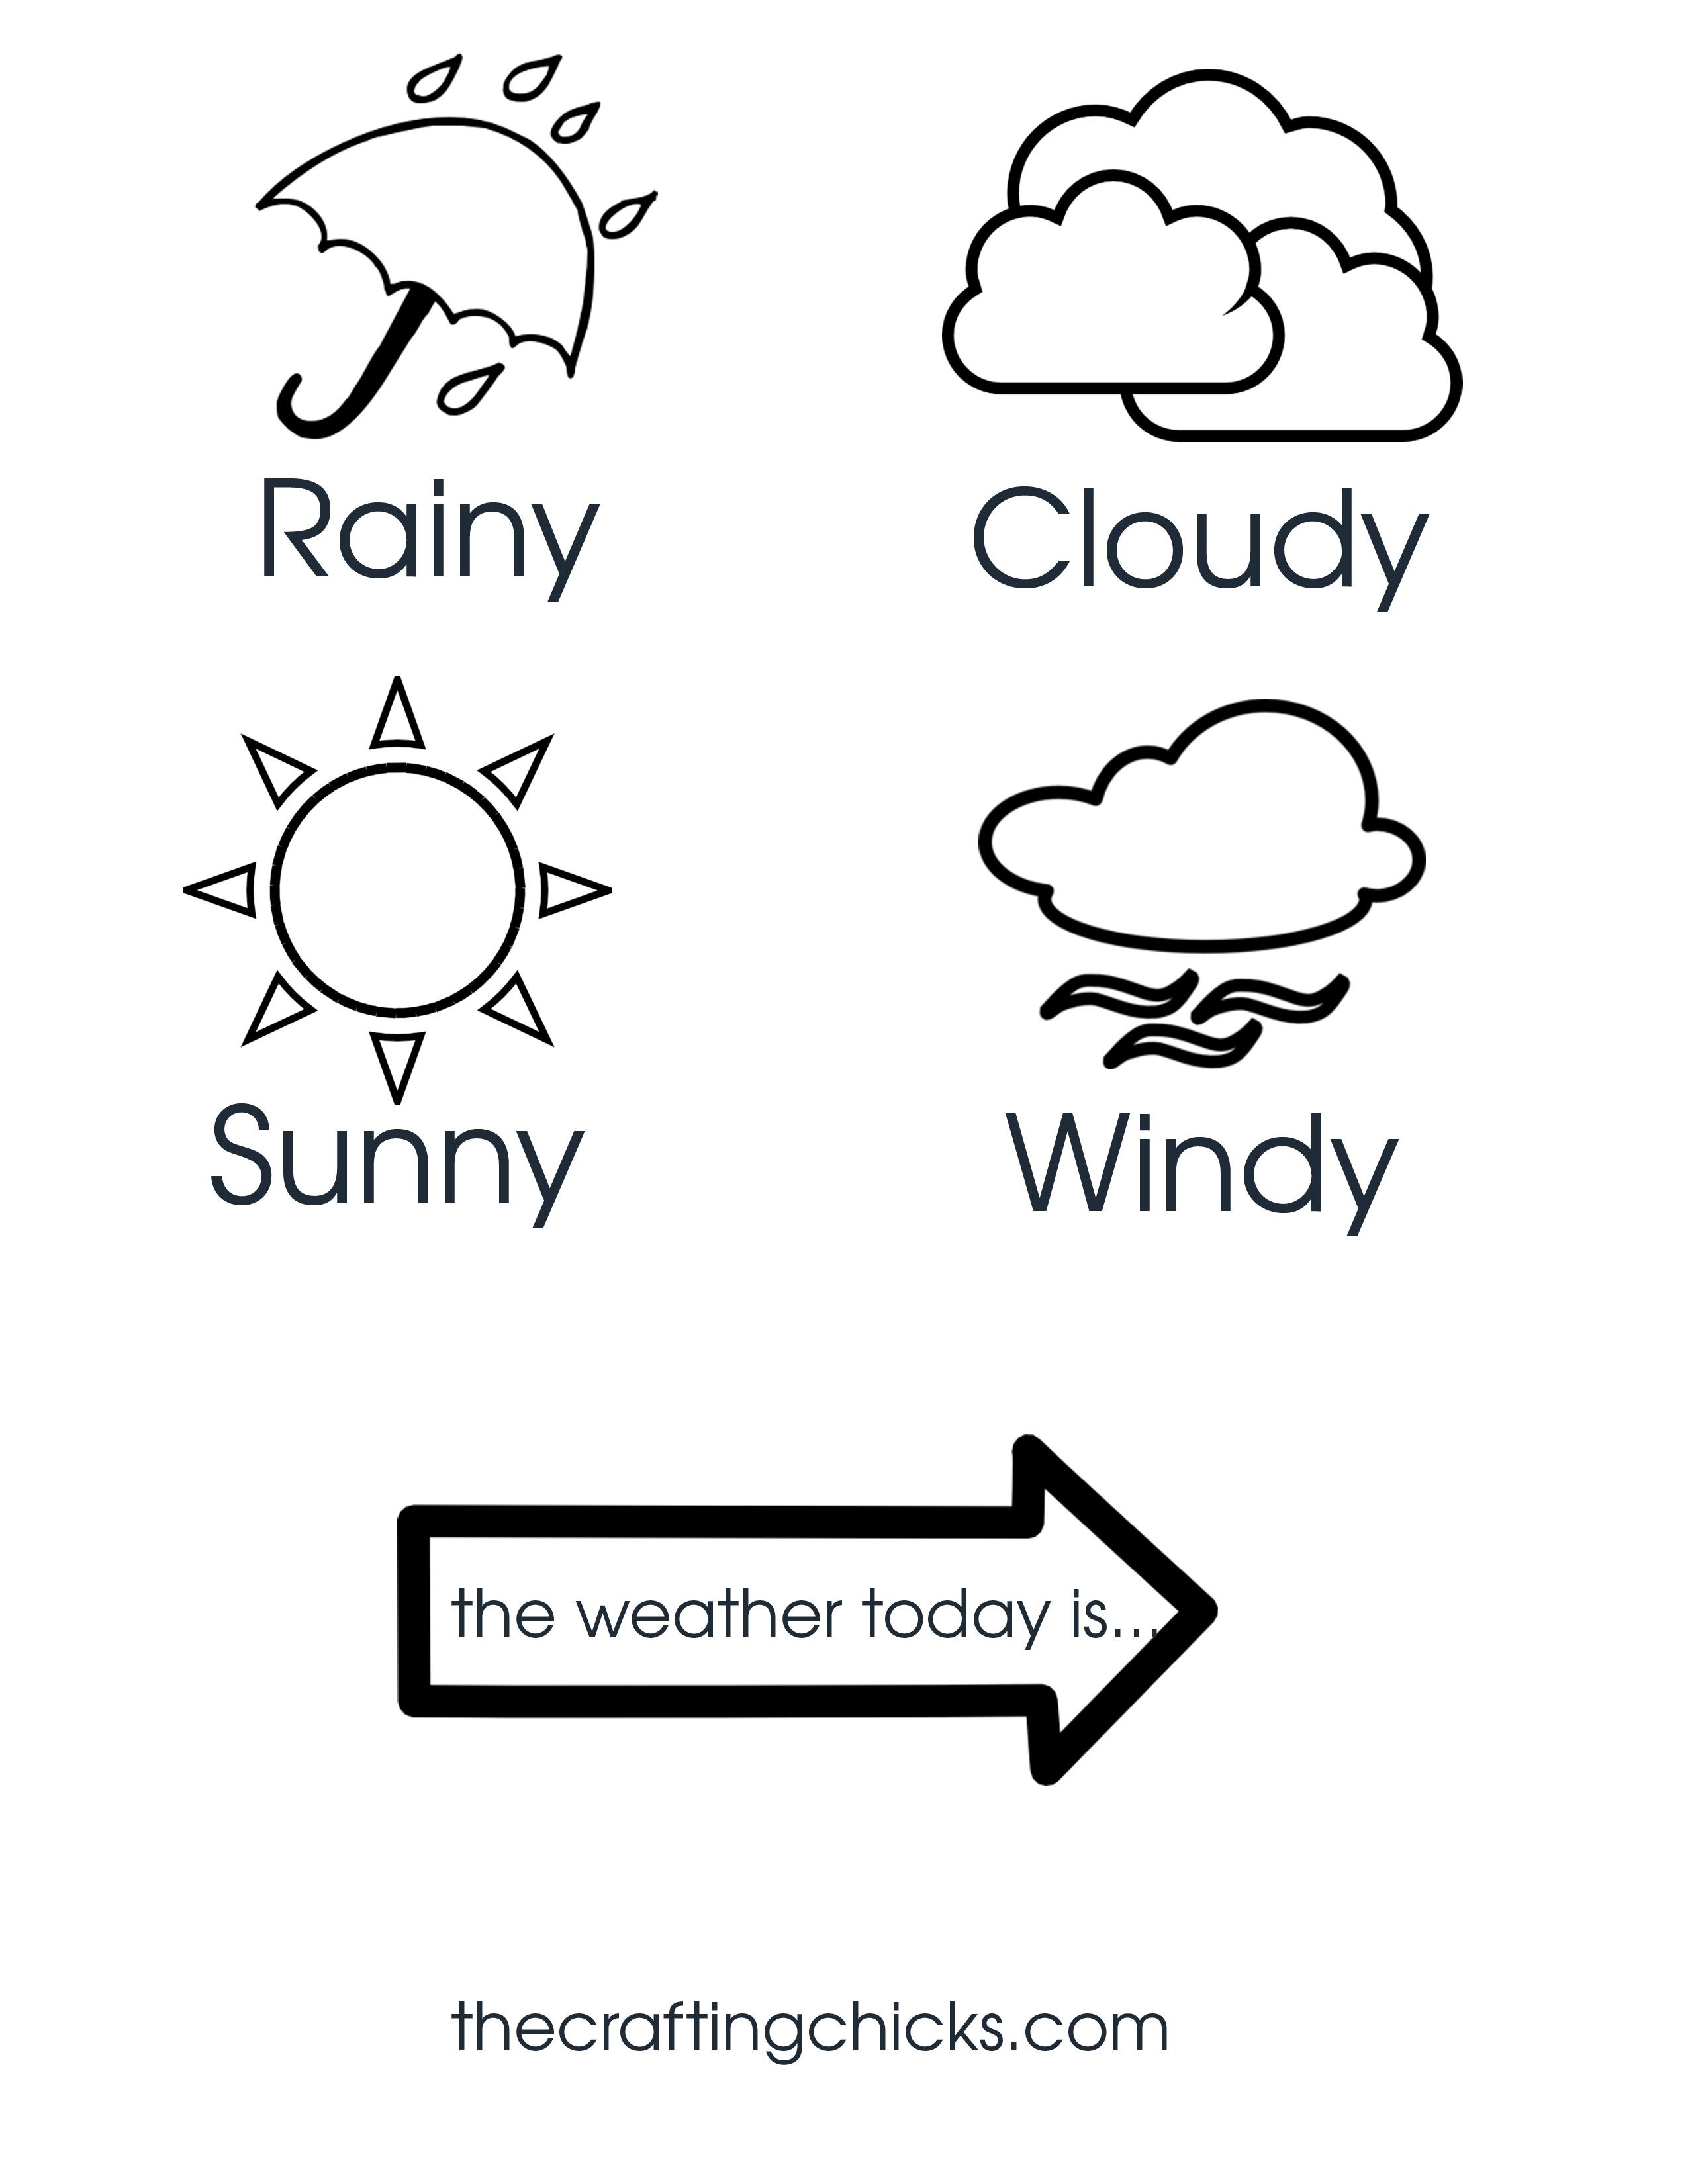 Weather colouring. Раскраска погода на английском. Weather для детей на английском. Weather раскраска для детей. Погода на английском для детей раскраска.